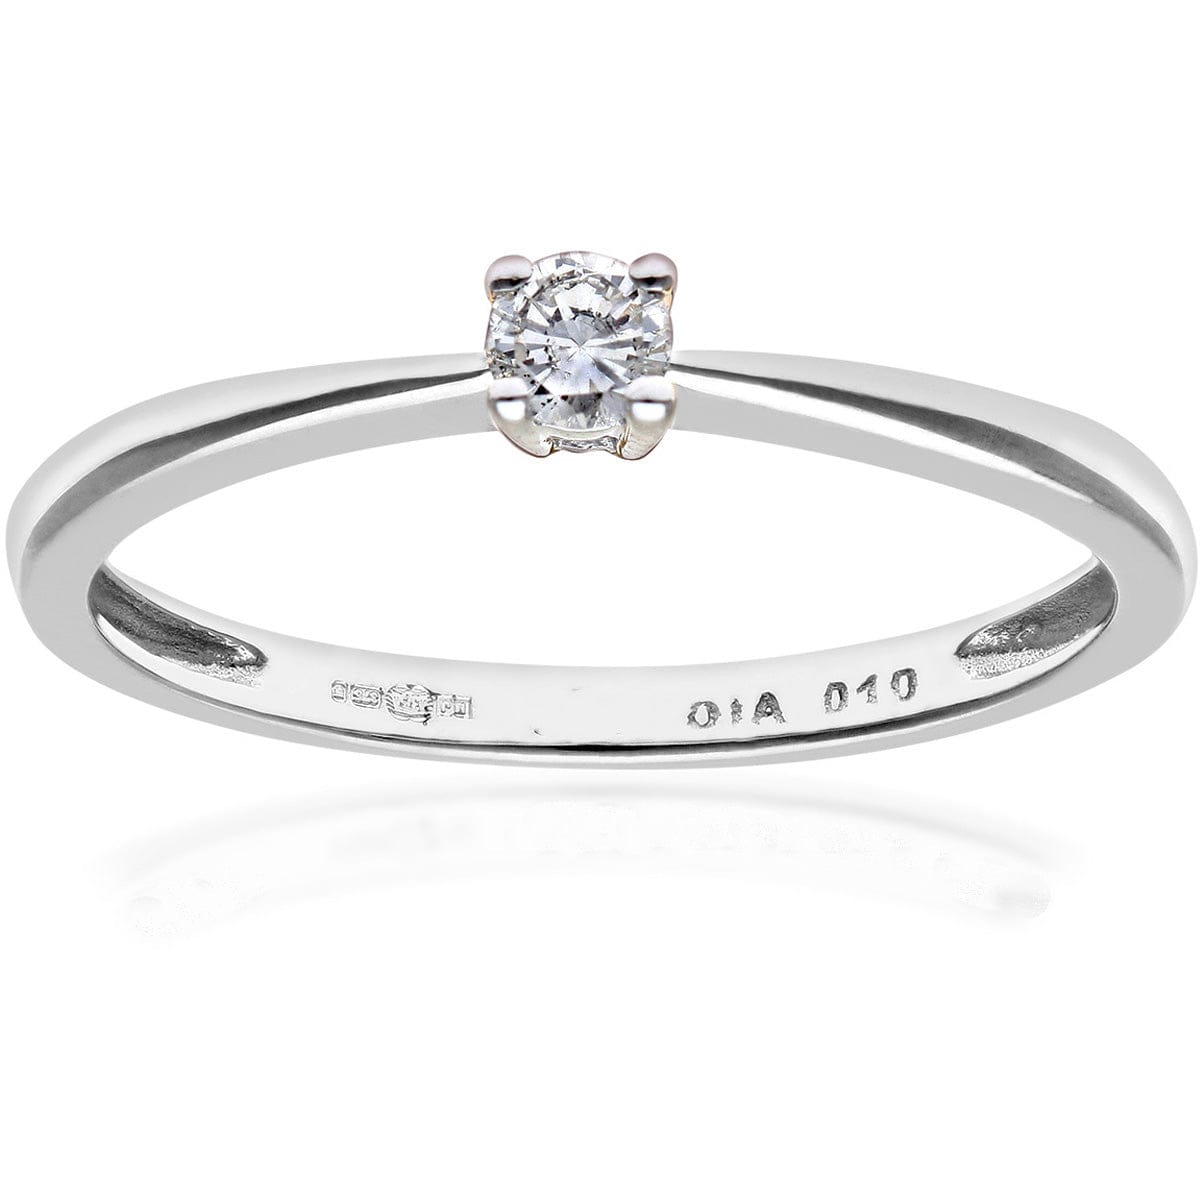 Lynora Luxe Ring White Gold 9ct / Diamond 9ct White Gold Diamond Engagement Ring